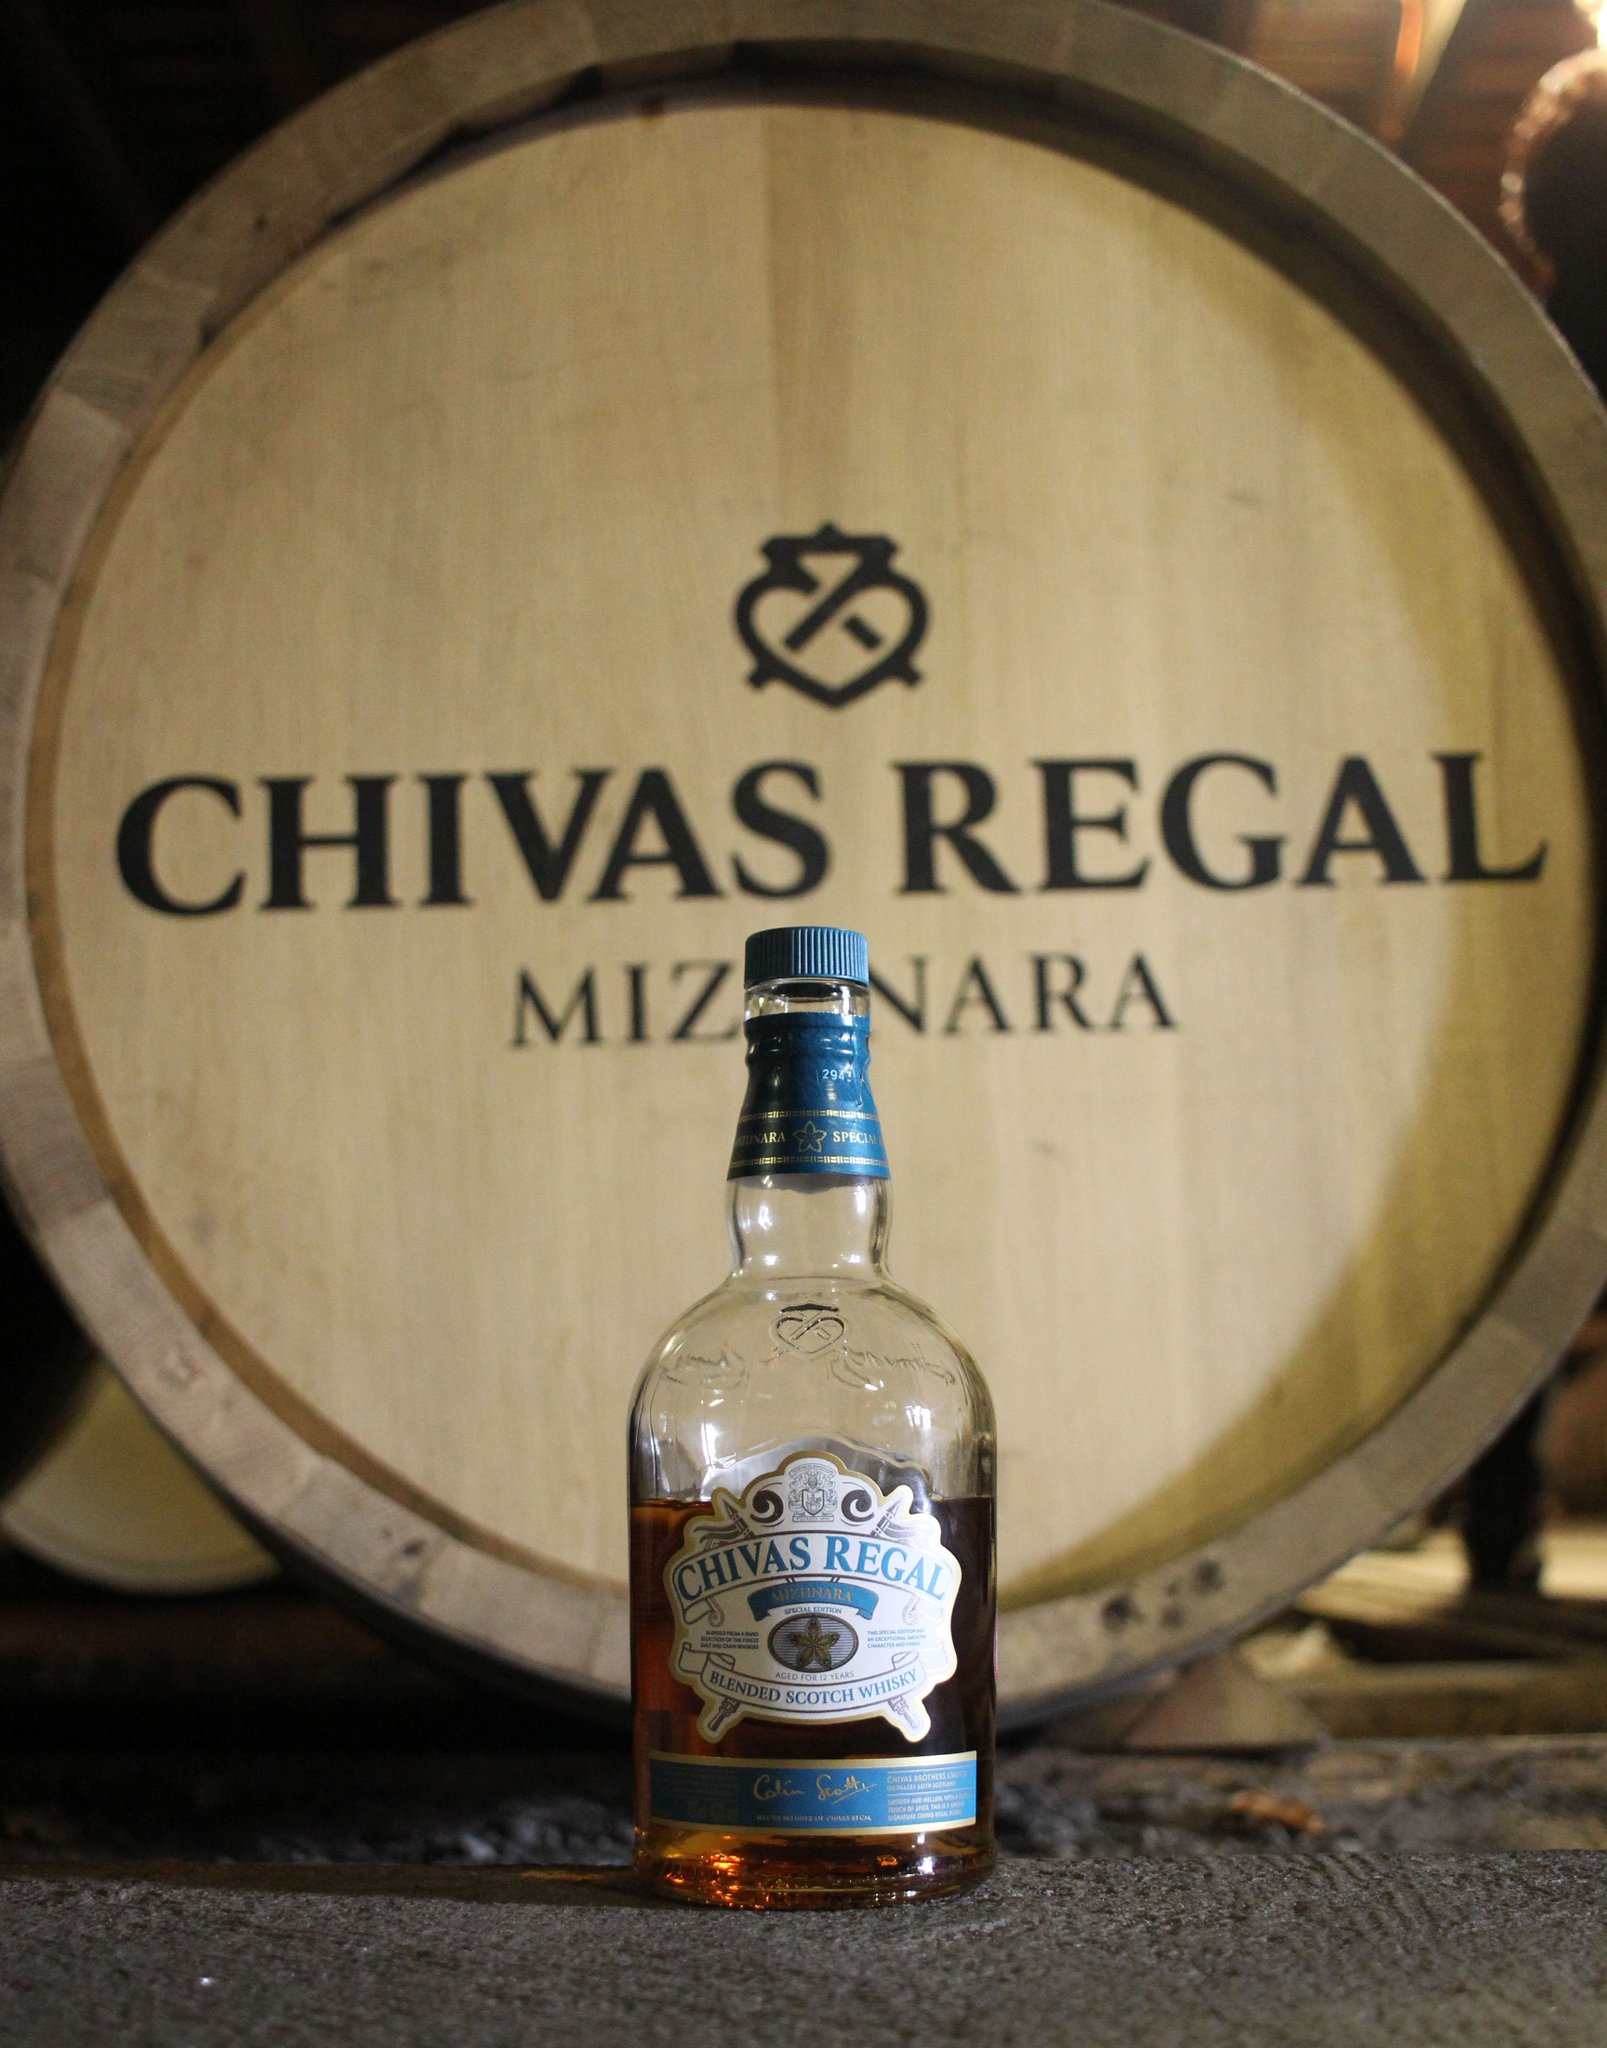 Chivas Regal Japan on Twitter: "芸術的な日本の伝統文化と日本のウイスキー造りへの賞賛